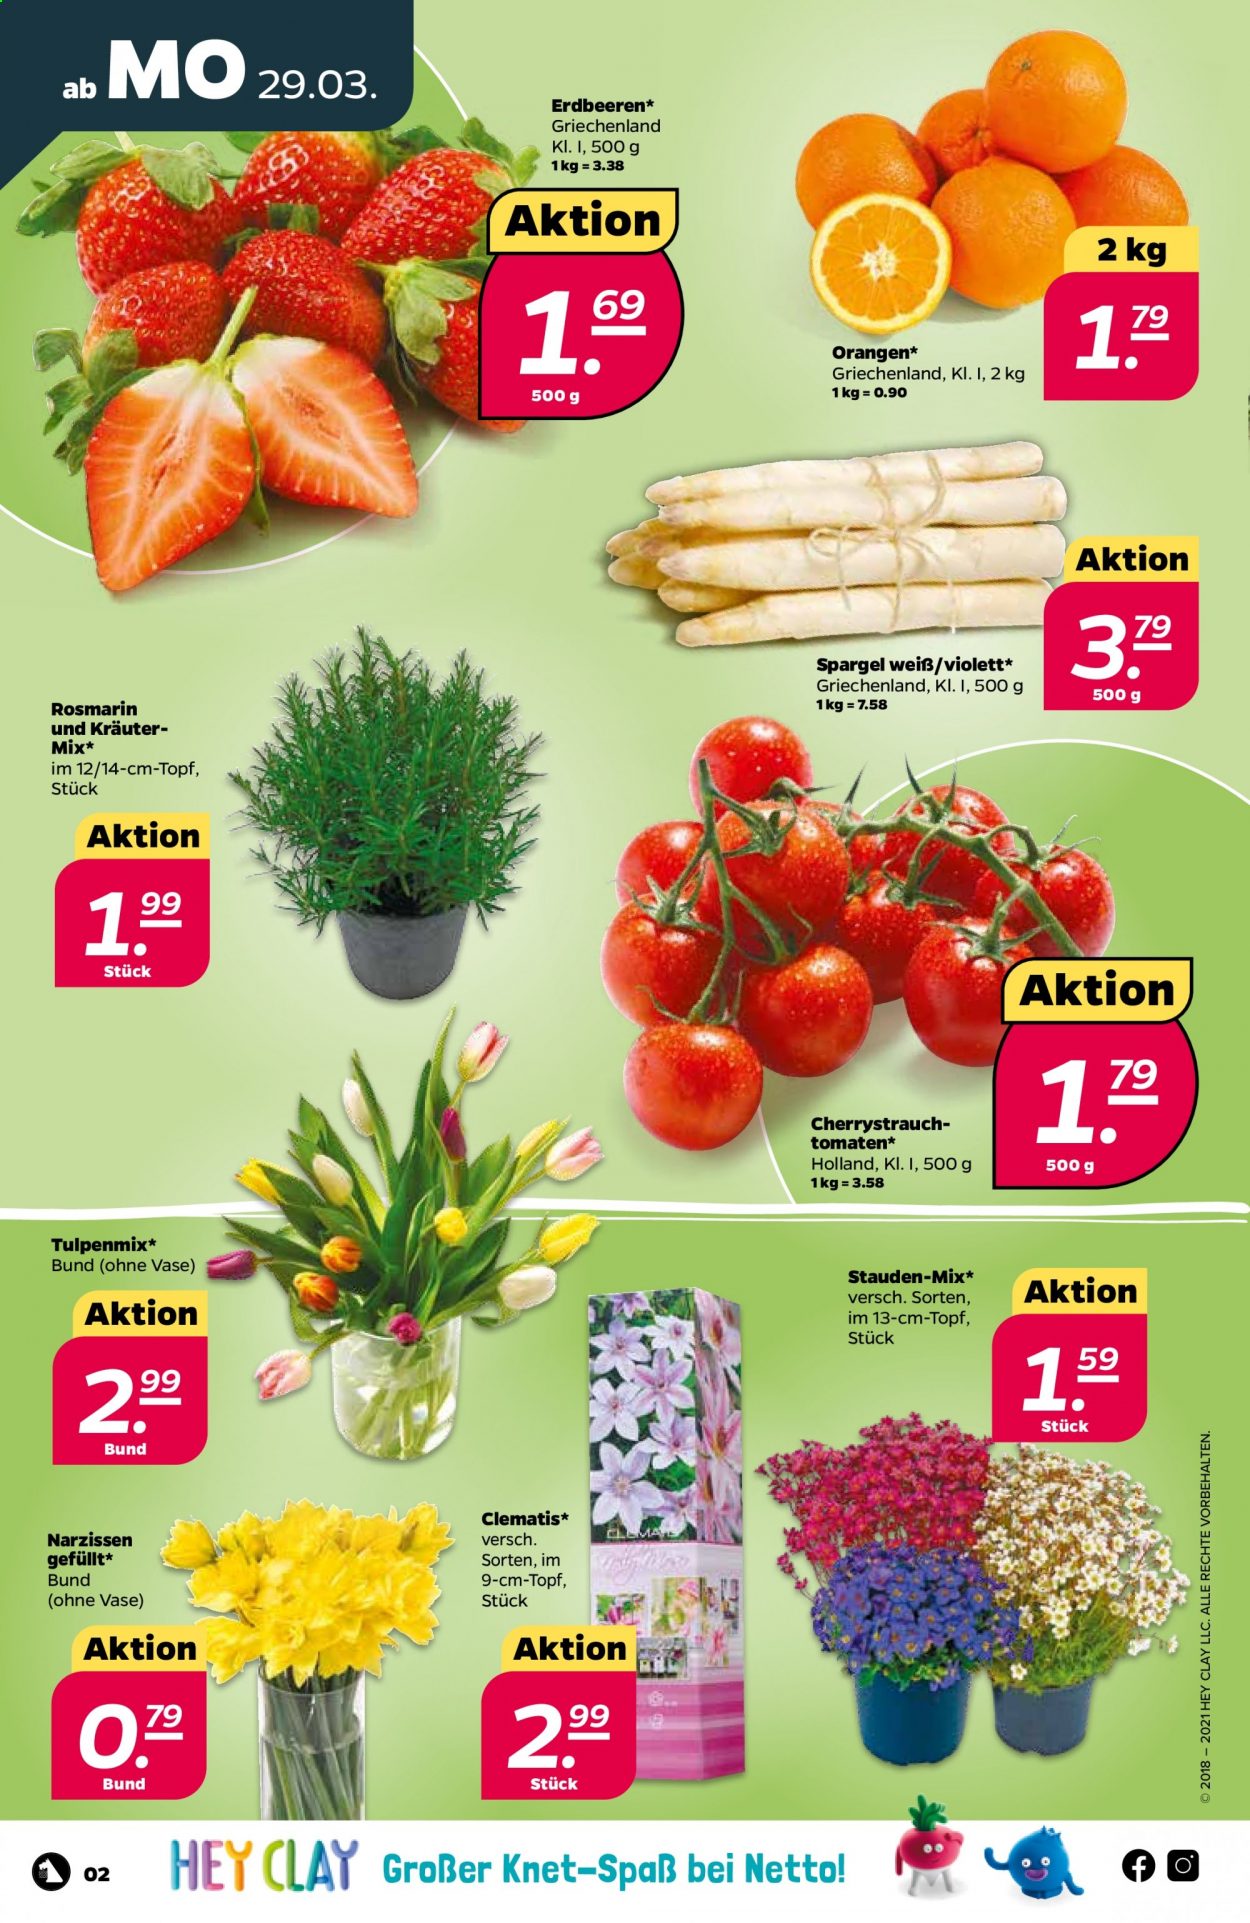 thumbnail - Prospekte Netto - 29.03.2021 - 3.04.2021 - Produkte in Aktion - Tomaten, Spargel, Erdbeeren, Rosmarin, Kräuter, Topf, Vase, Narzissen. Seite 2.